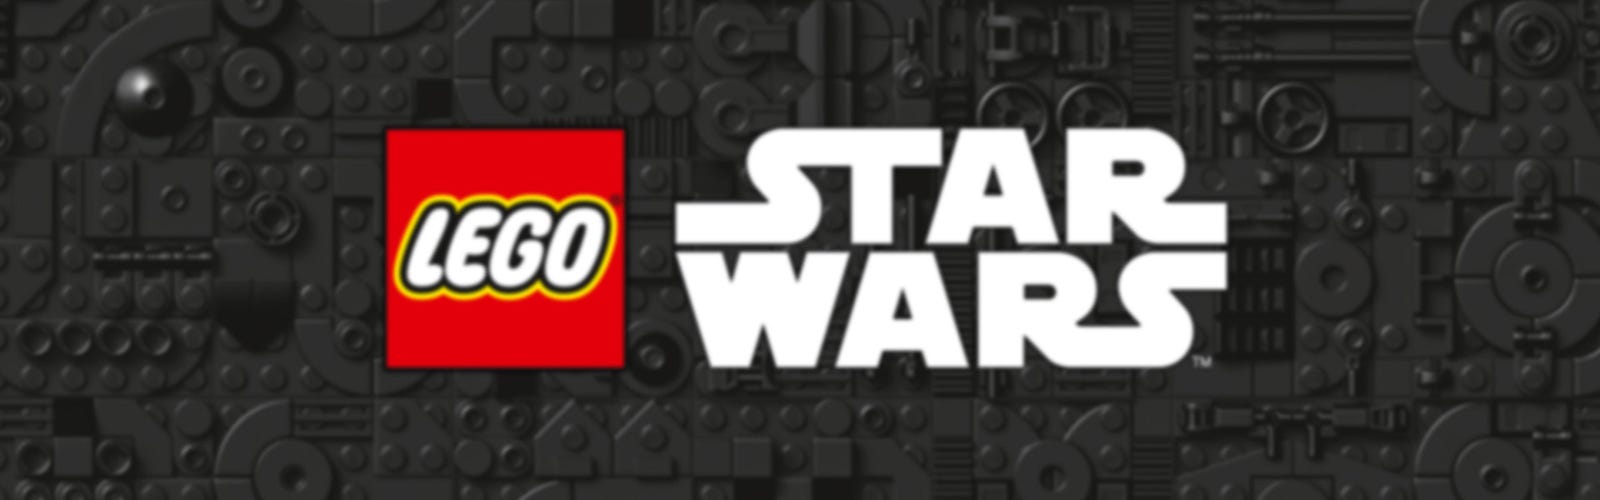 Le bombardier TIE Lego Star Wars 75347 - La Grande Récré